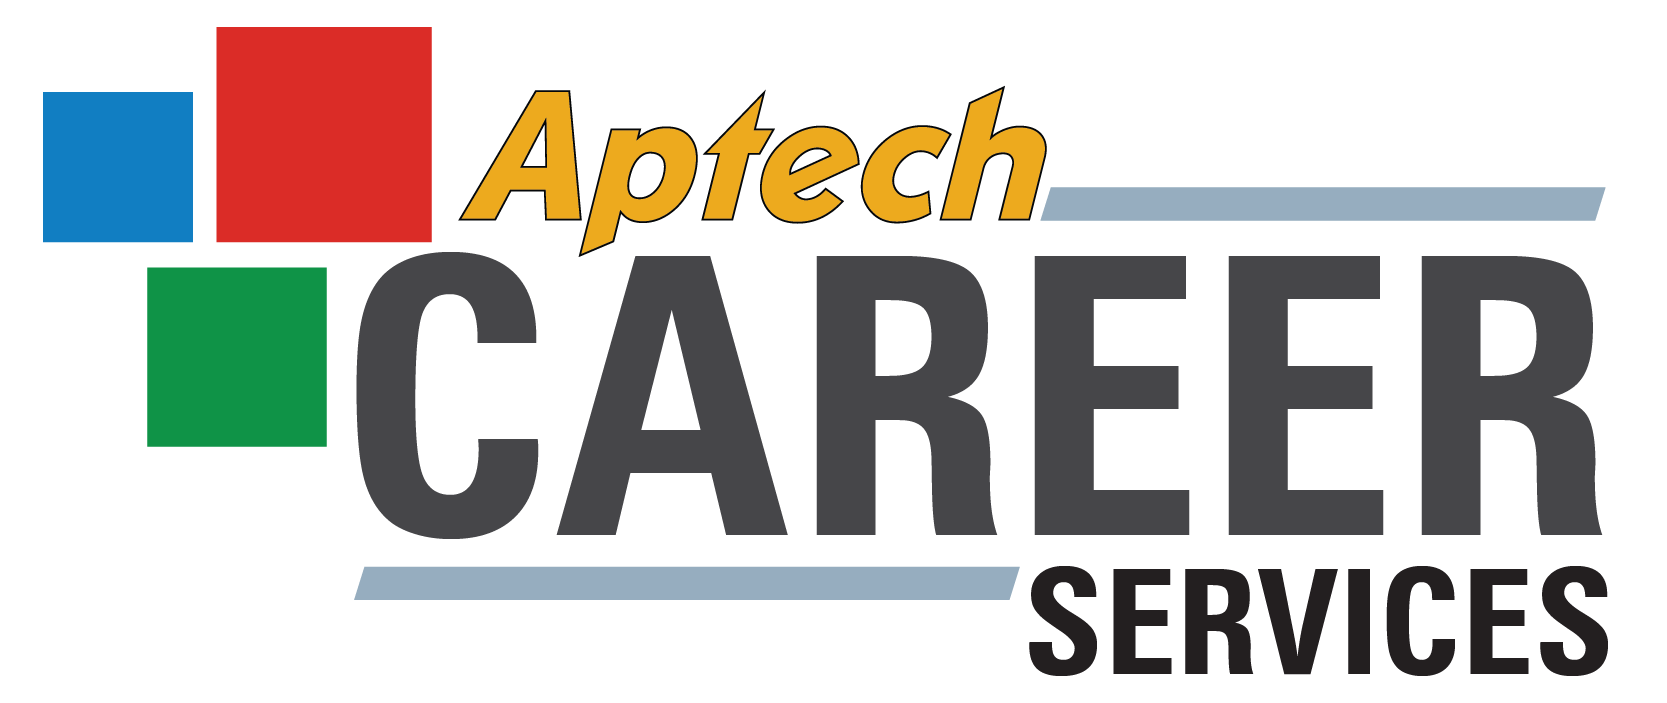 Aptech Career Services